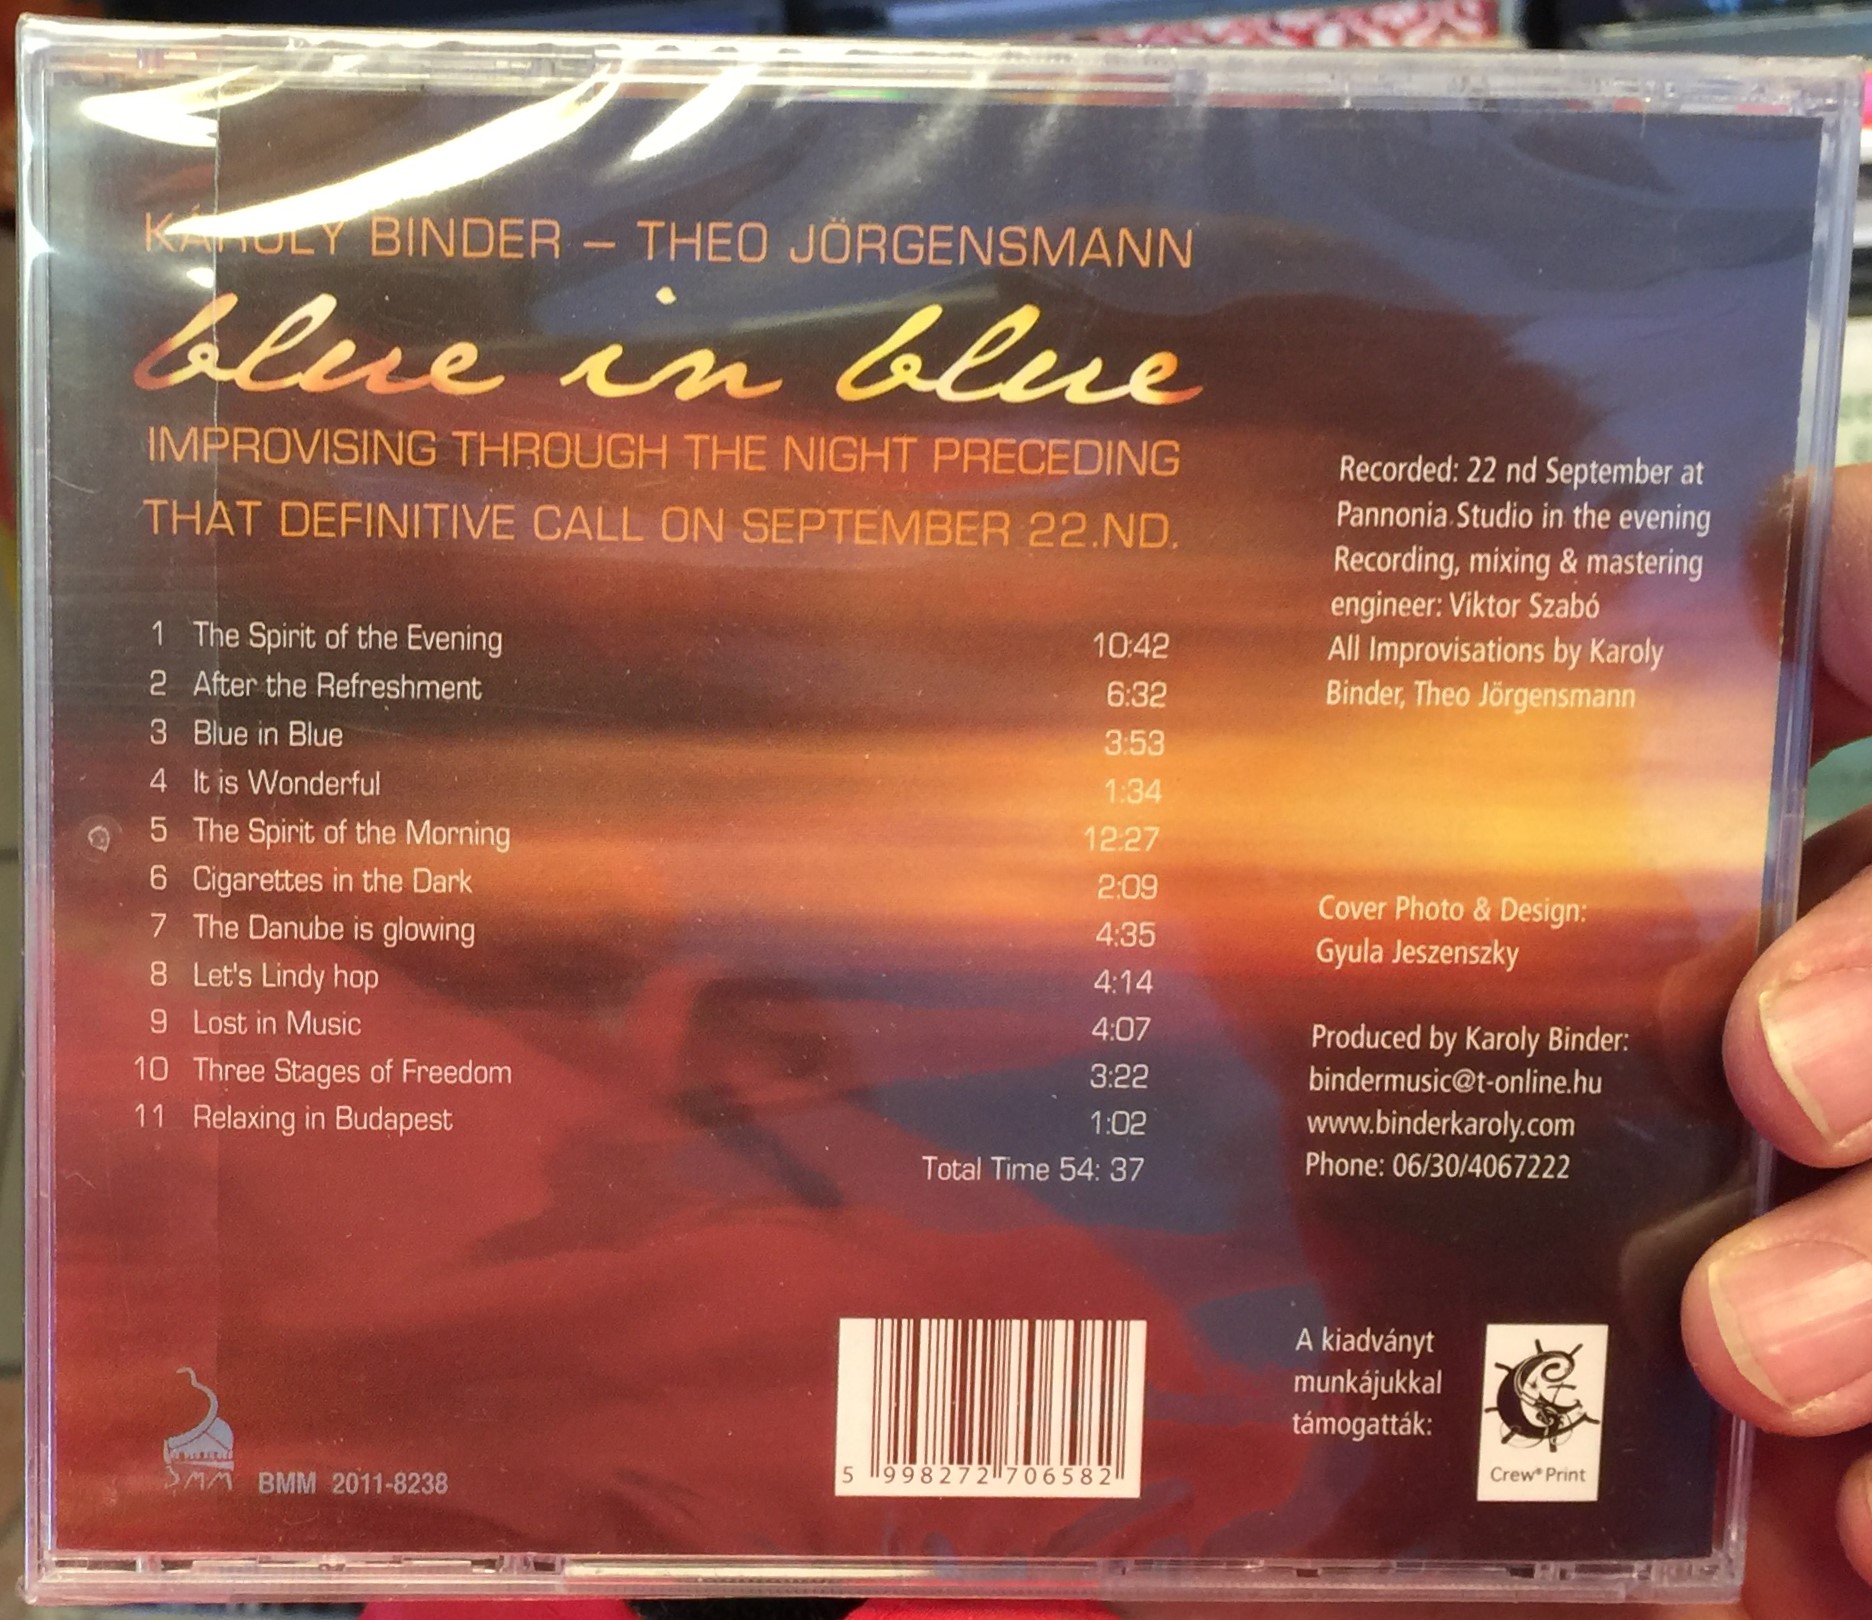 k-roly-binder-theo-j-rgensmann-blue-in-blue-improvising-through-the-night-preceding-that-definitive-call-on-september-22.-nd.-binder-music-manufactory-audio-cd-2011-bmm-2011-8238-2-.jpg